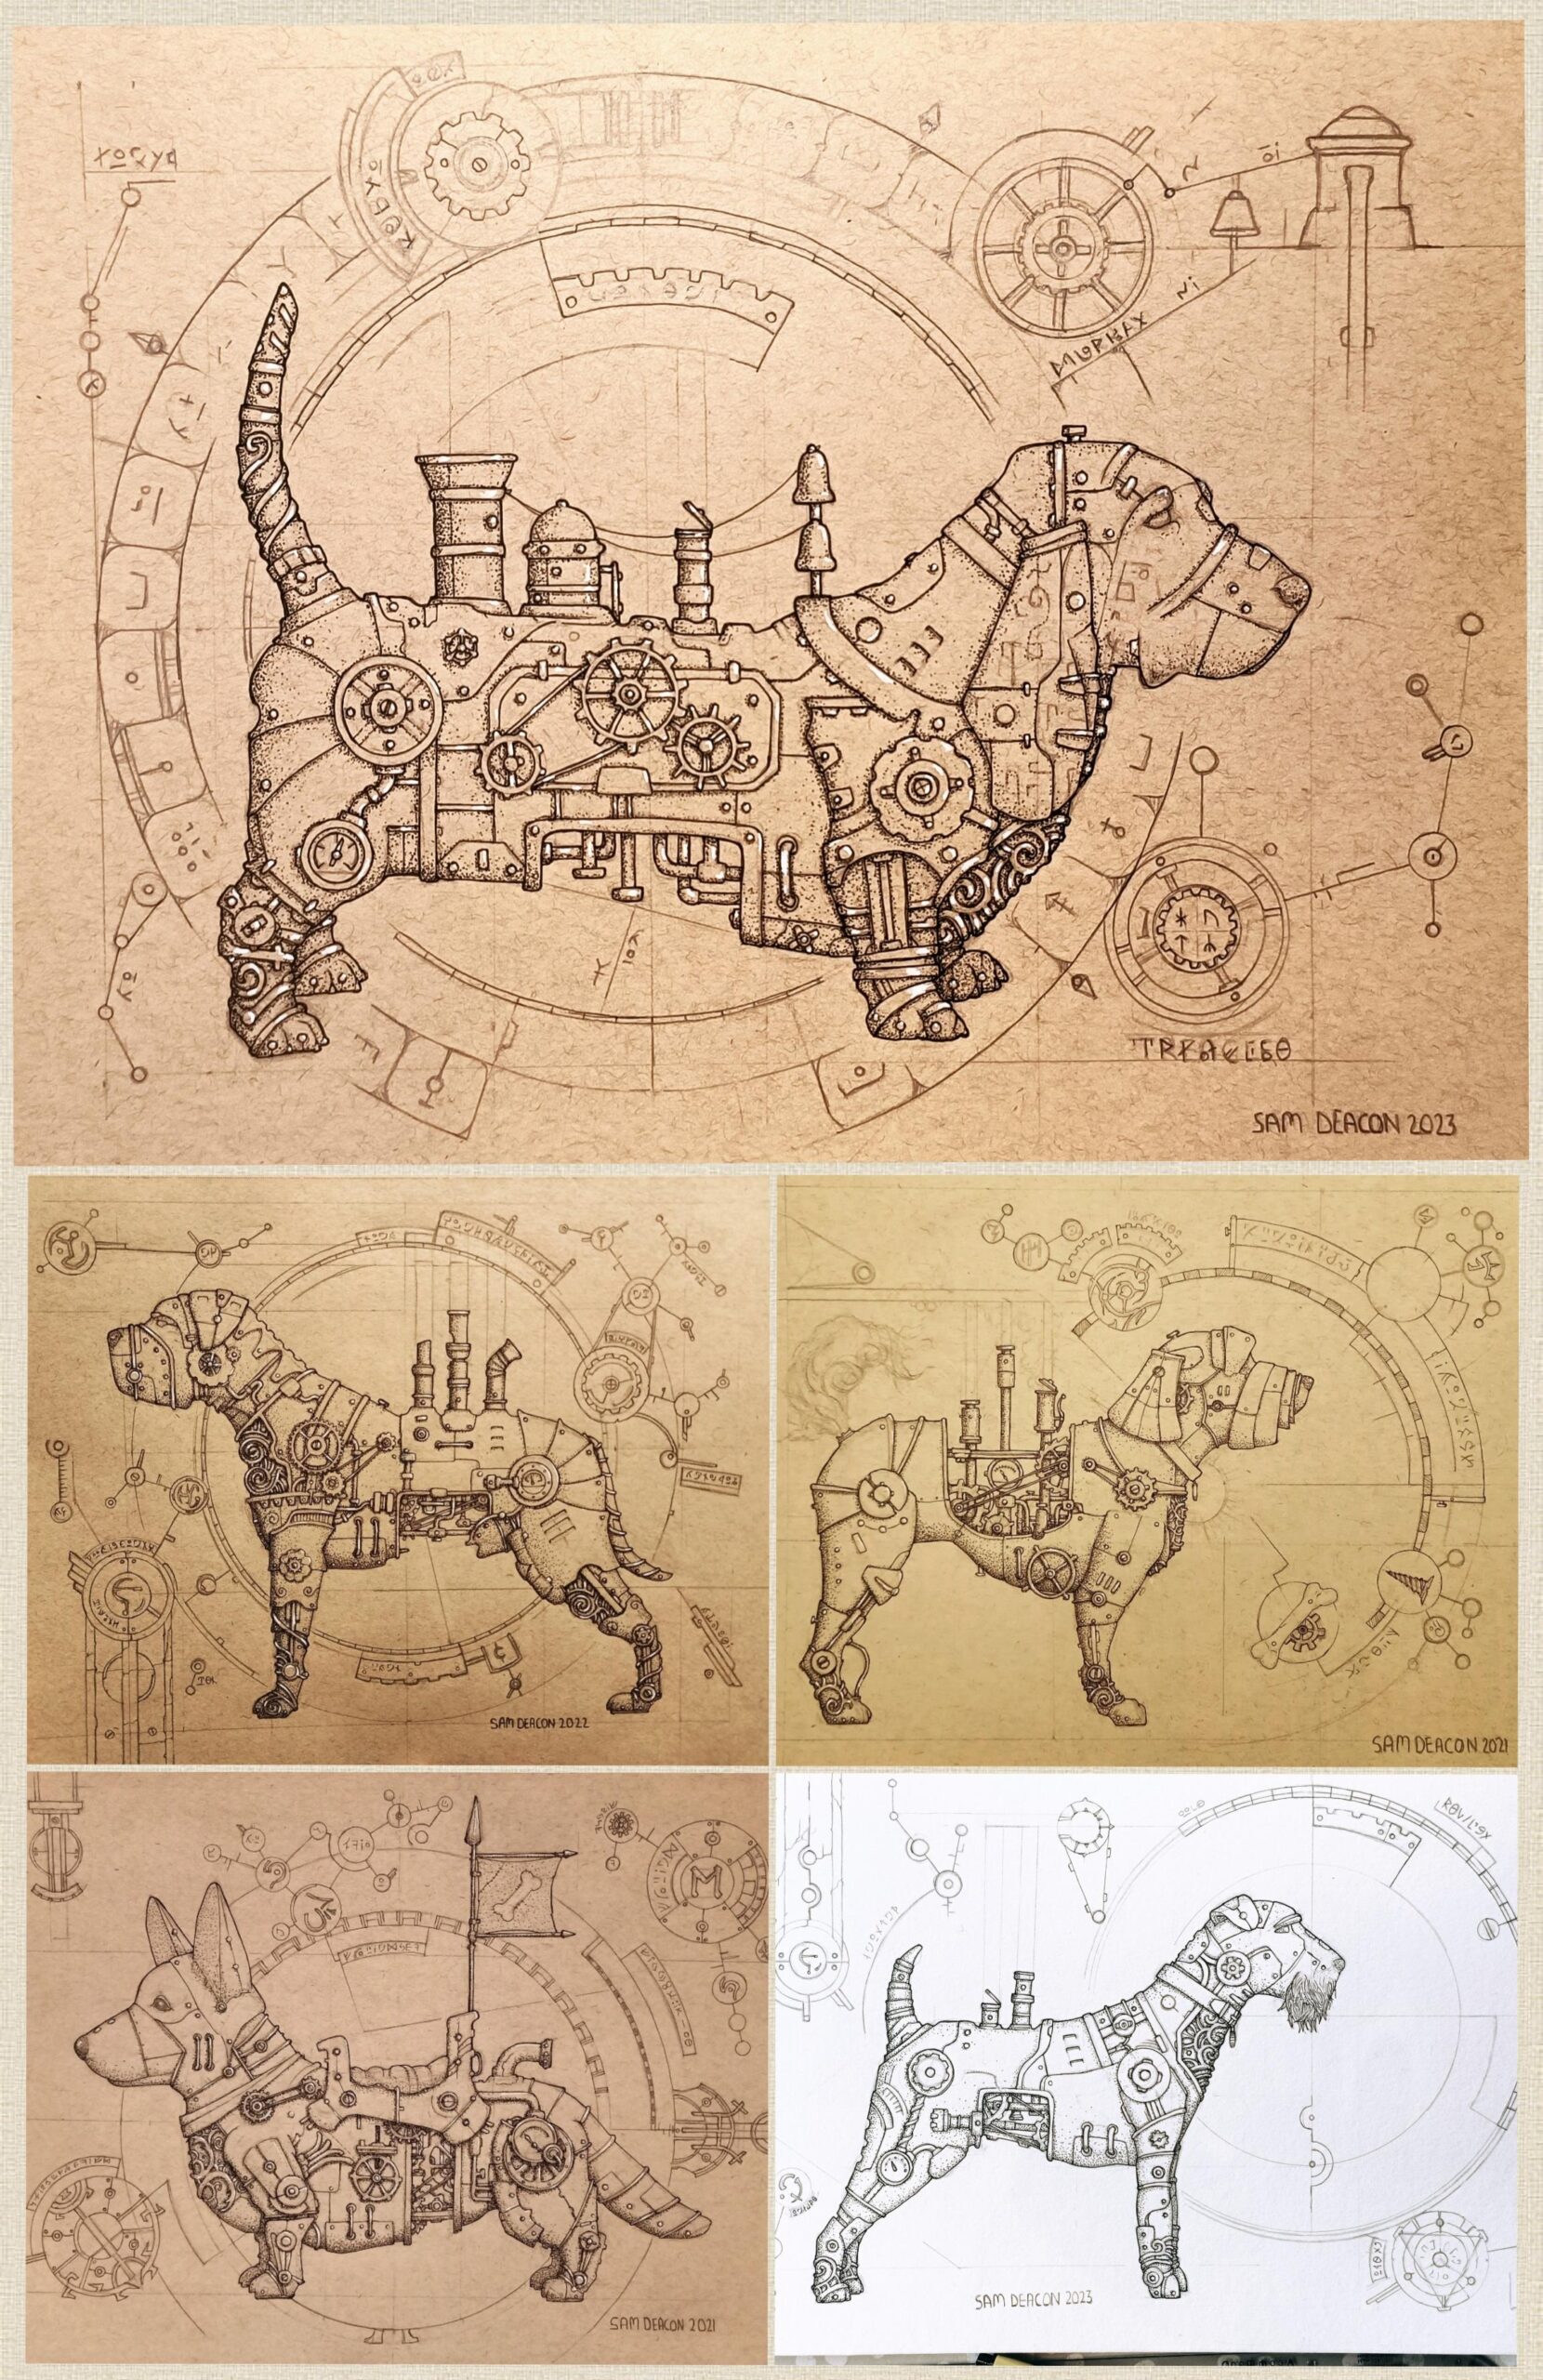 All of my steampunk dogga drawings so far